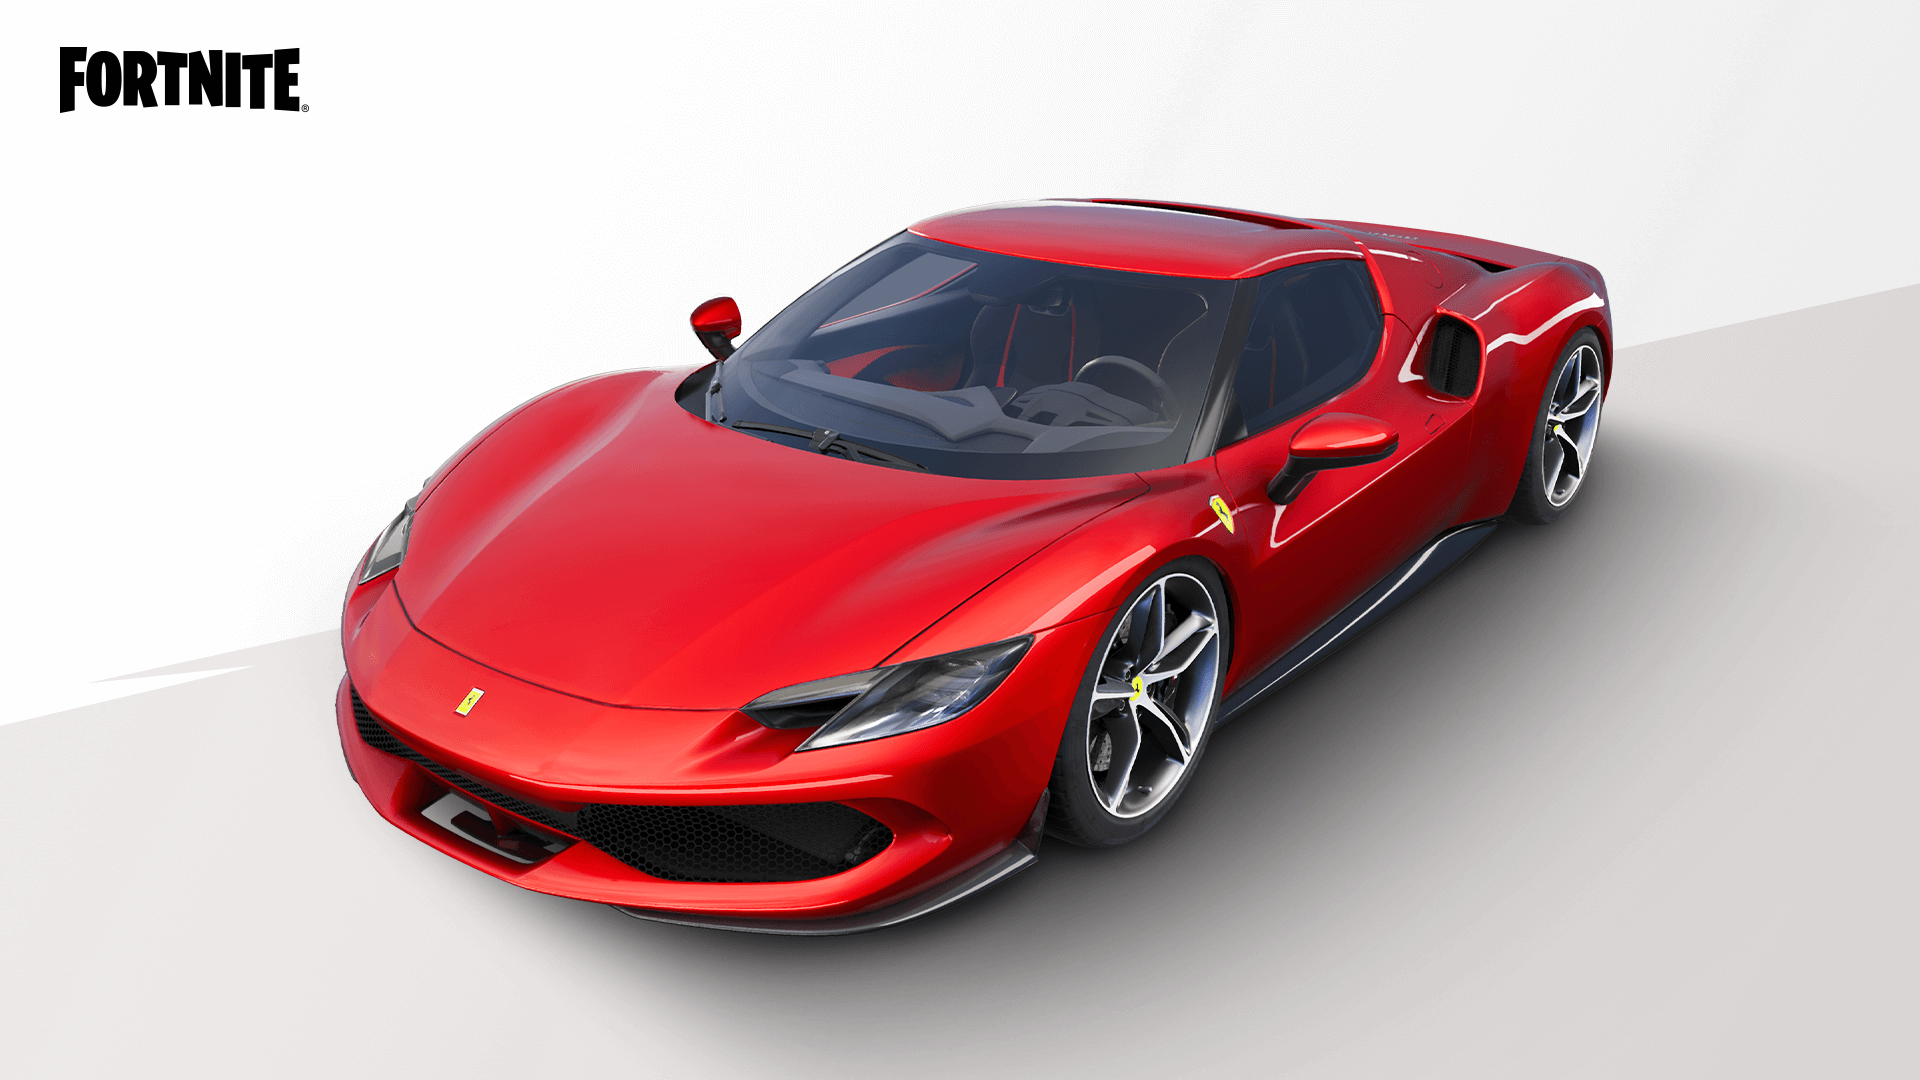 Ferrari has Arrived in Fortnite